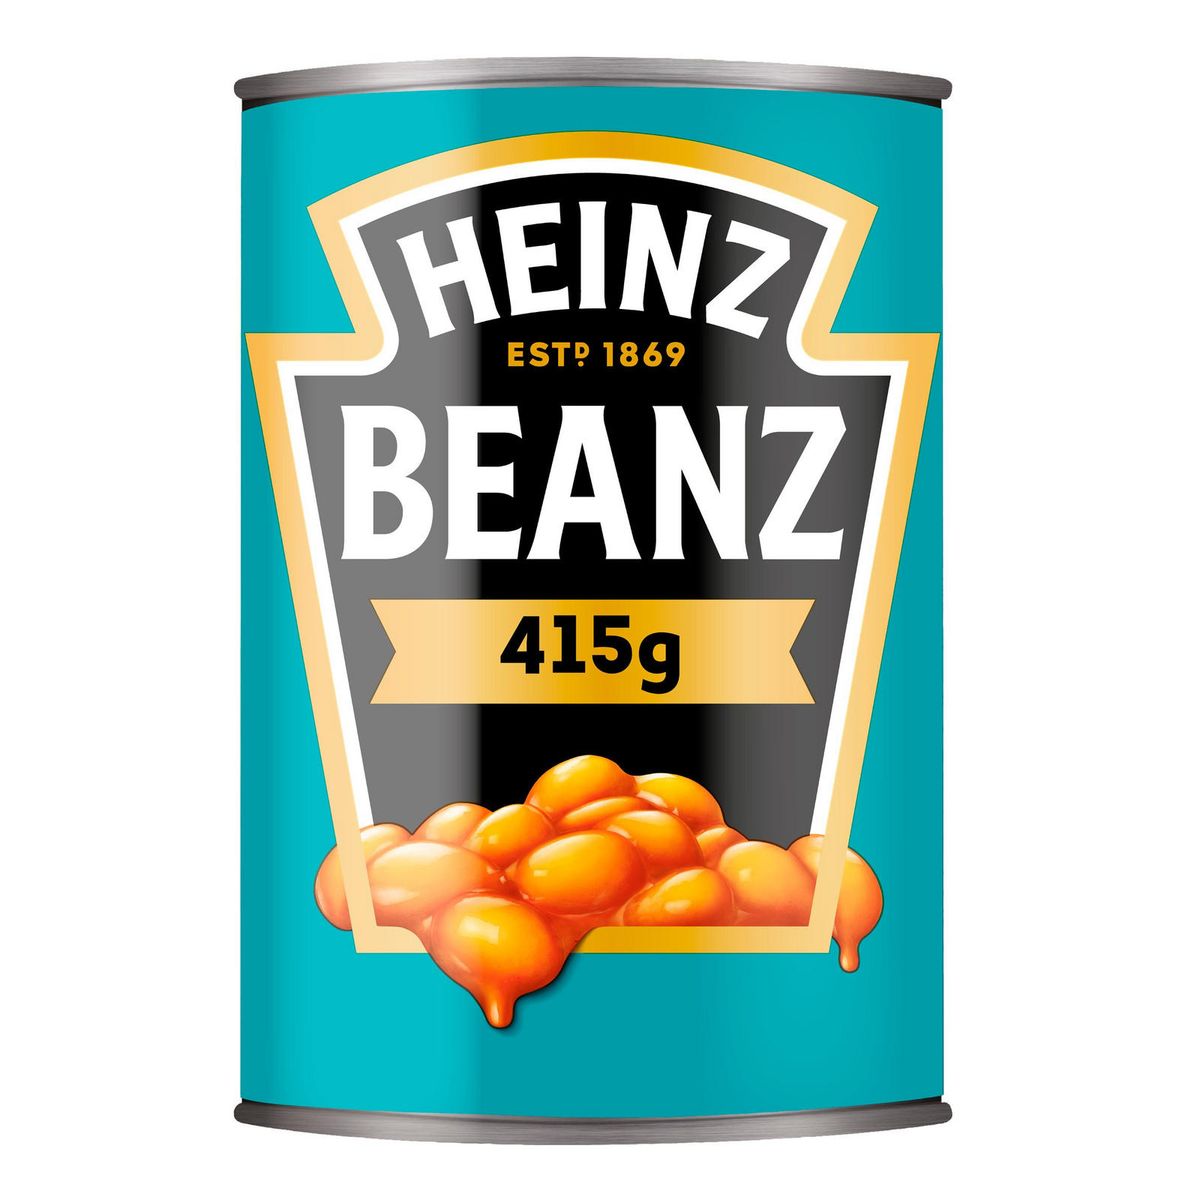 Heinze beans Blank Meme Template